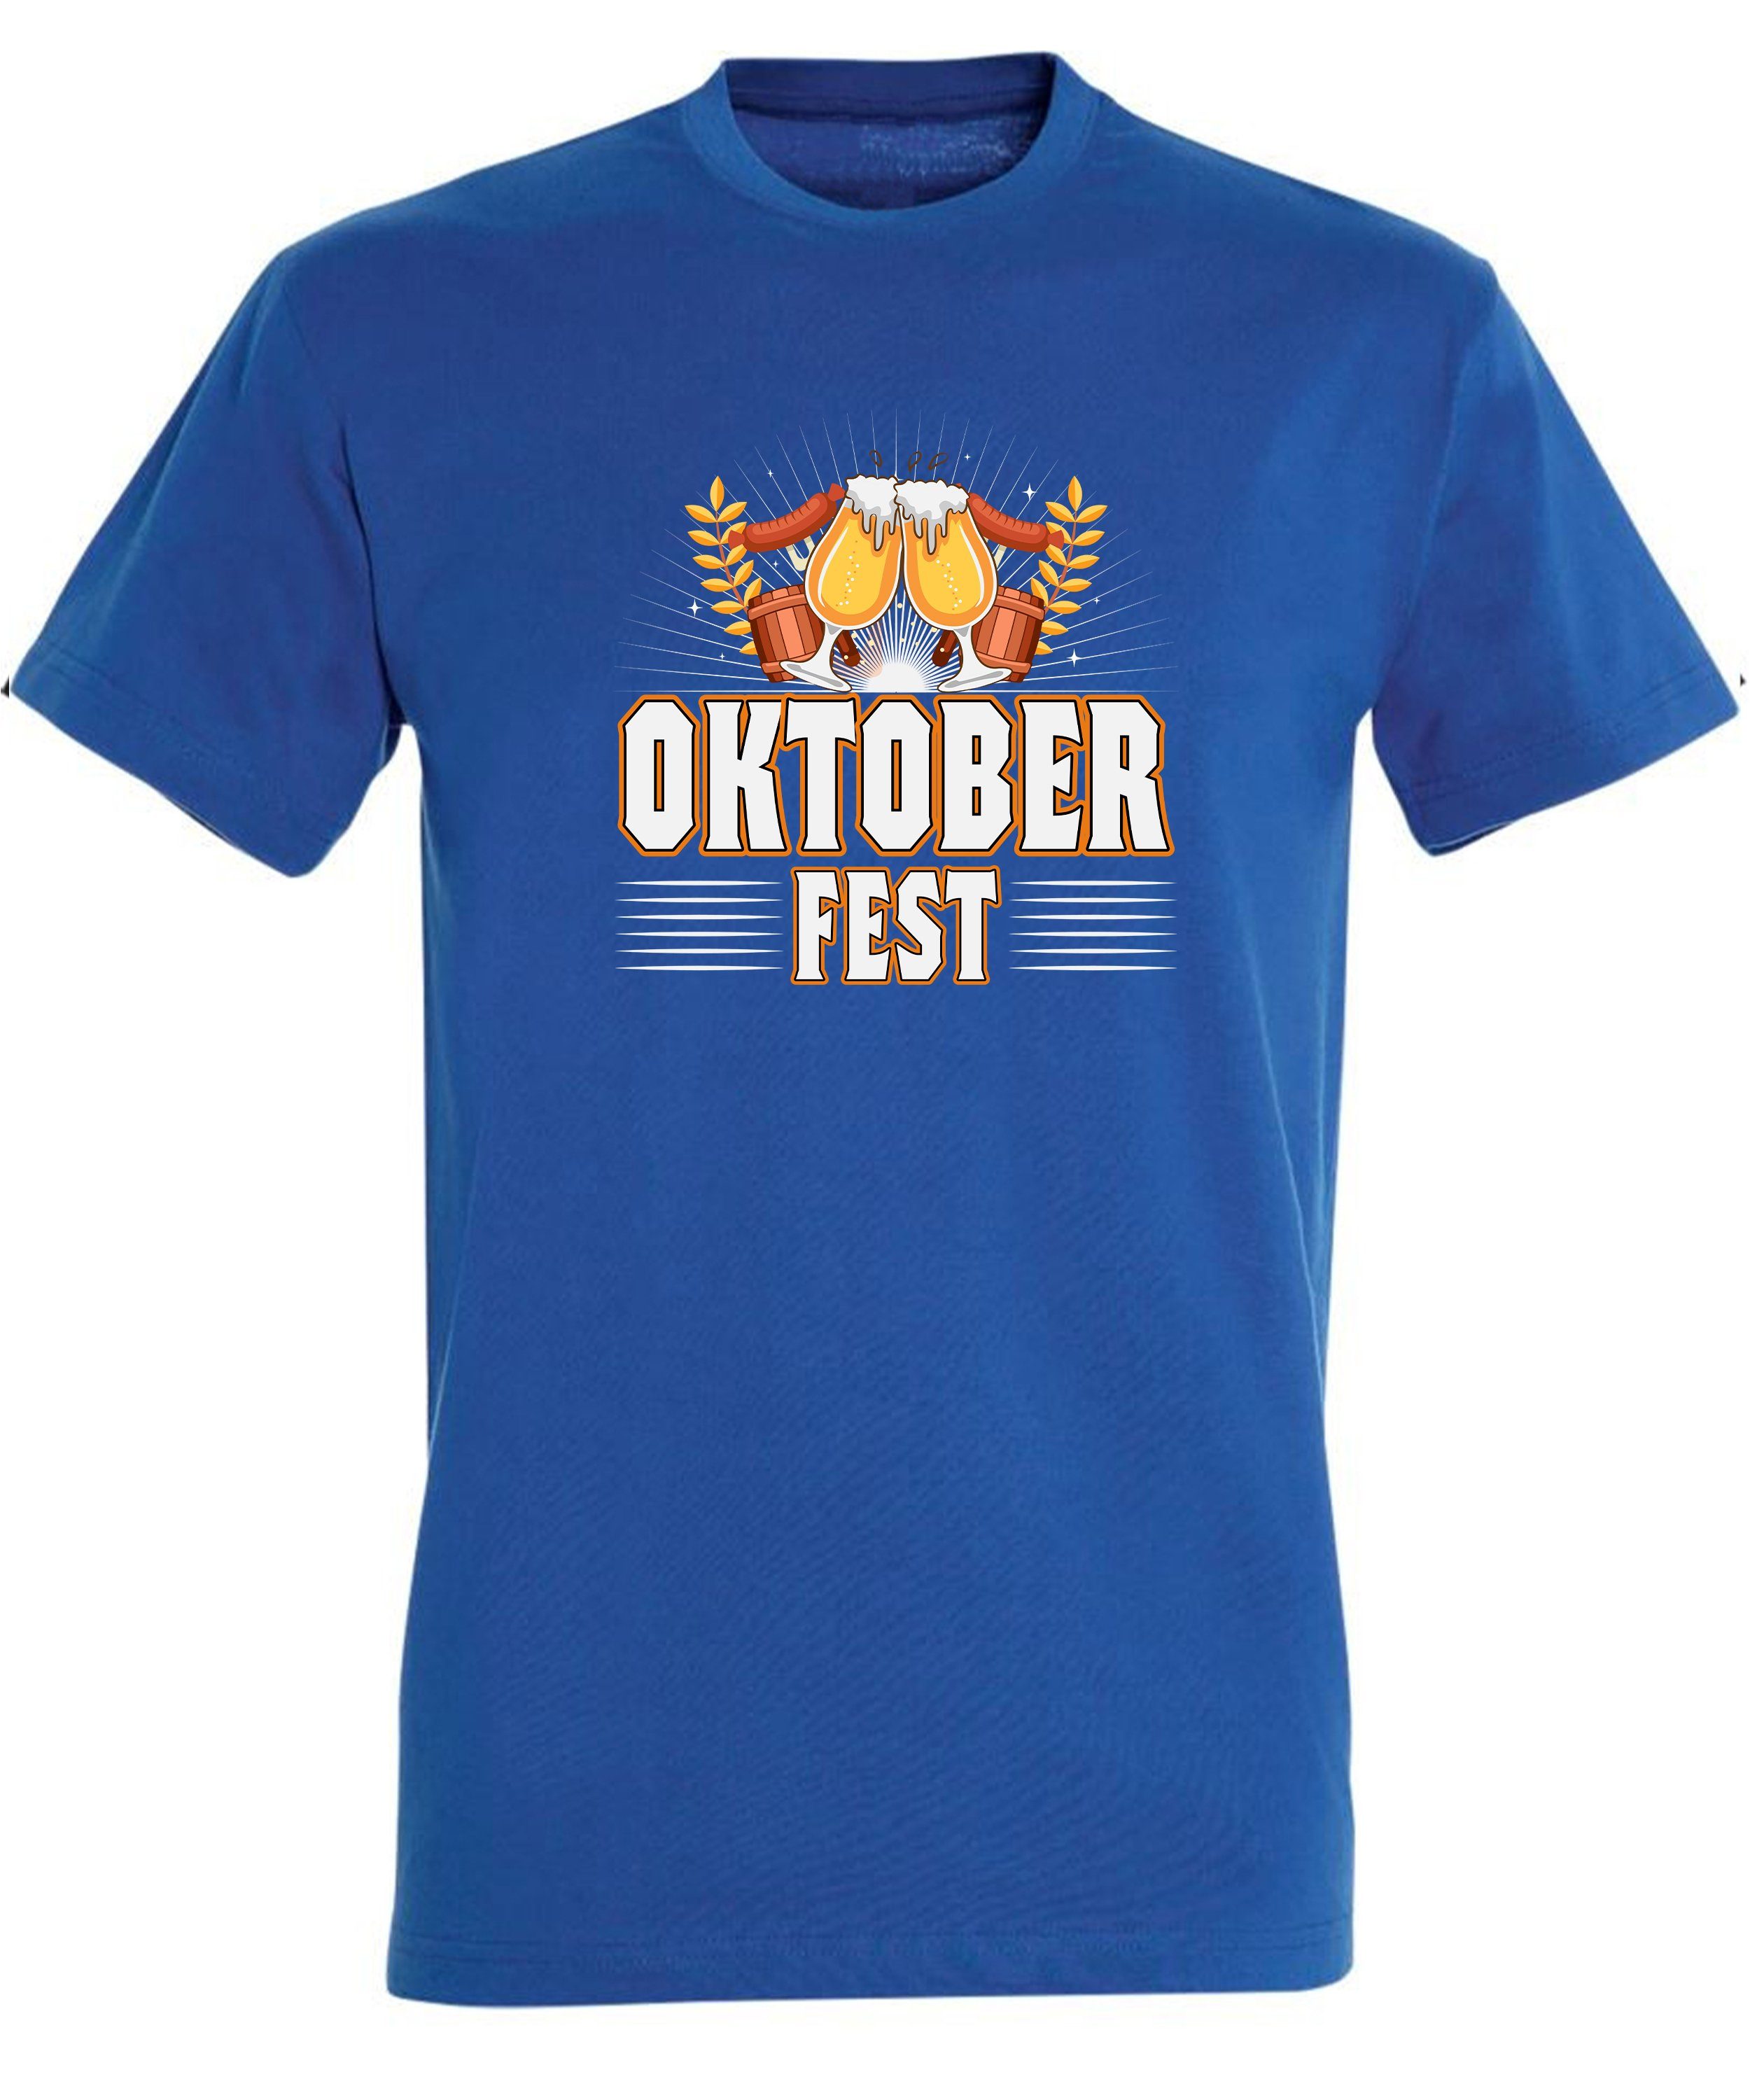 Aufdruck Shirt Party Baumwollshirt Regular Oktoberfest royal i327 Fit, MyDesign24 T-Shirt mit - T-Shirt blau Herren